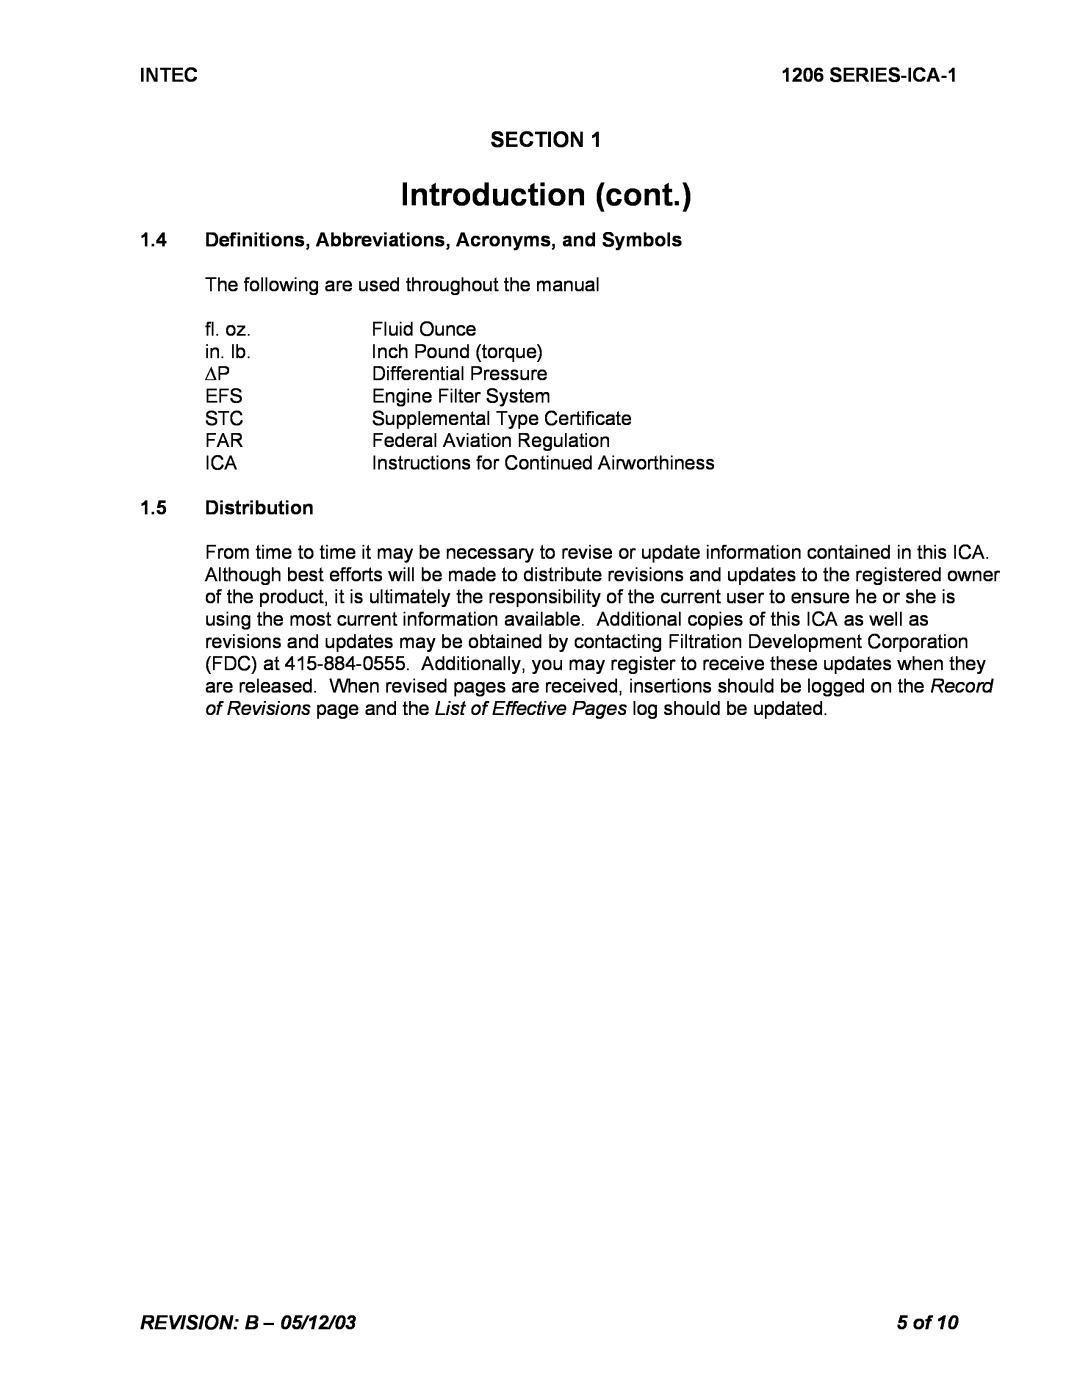 Intec STC SR00180SE manual Introduction cont, Section, Intec, SERIES-ICA-1, 1.5Distribution 